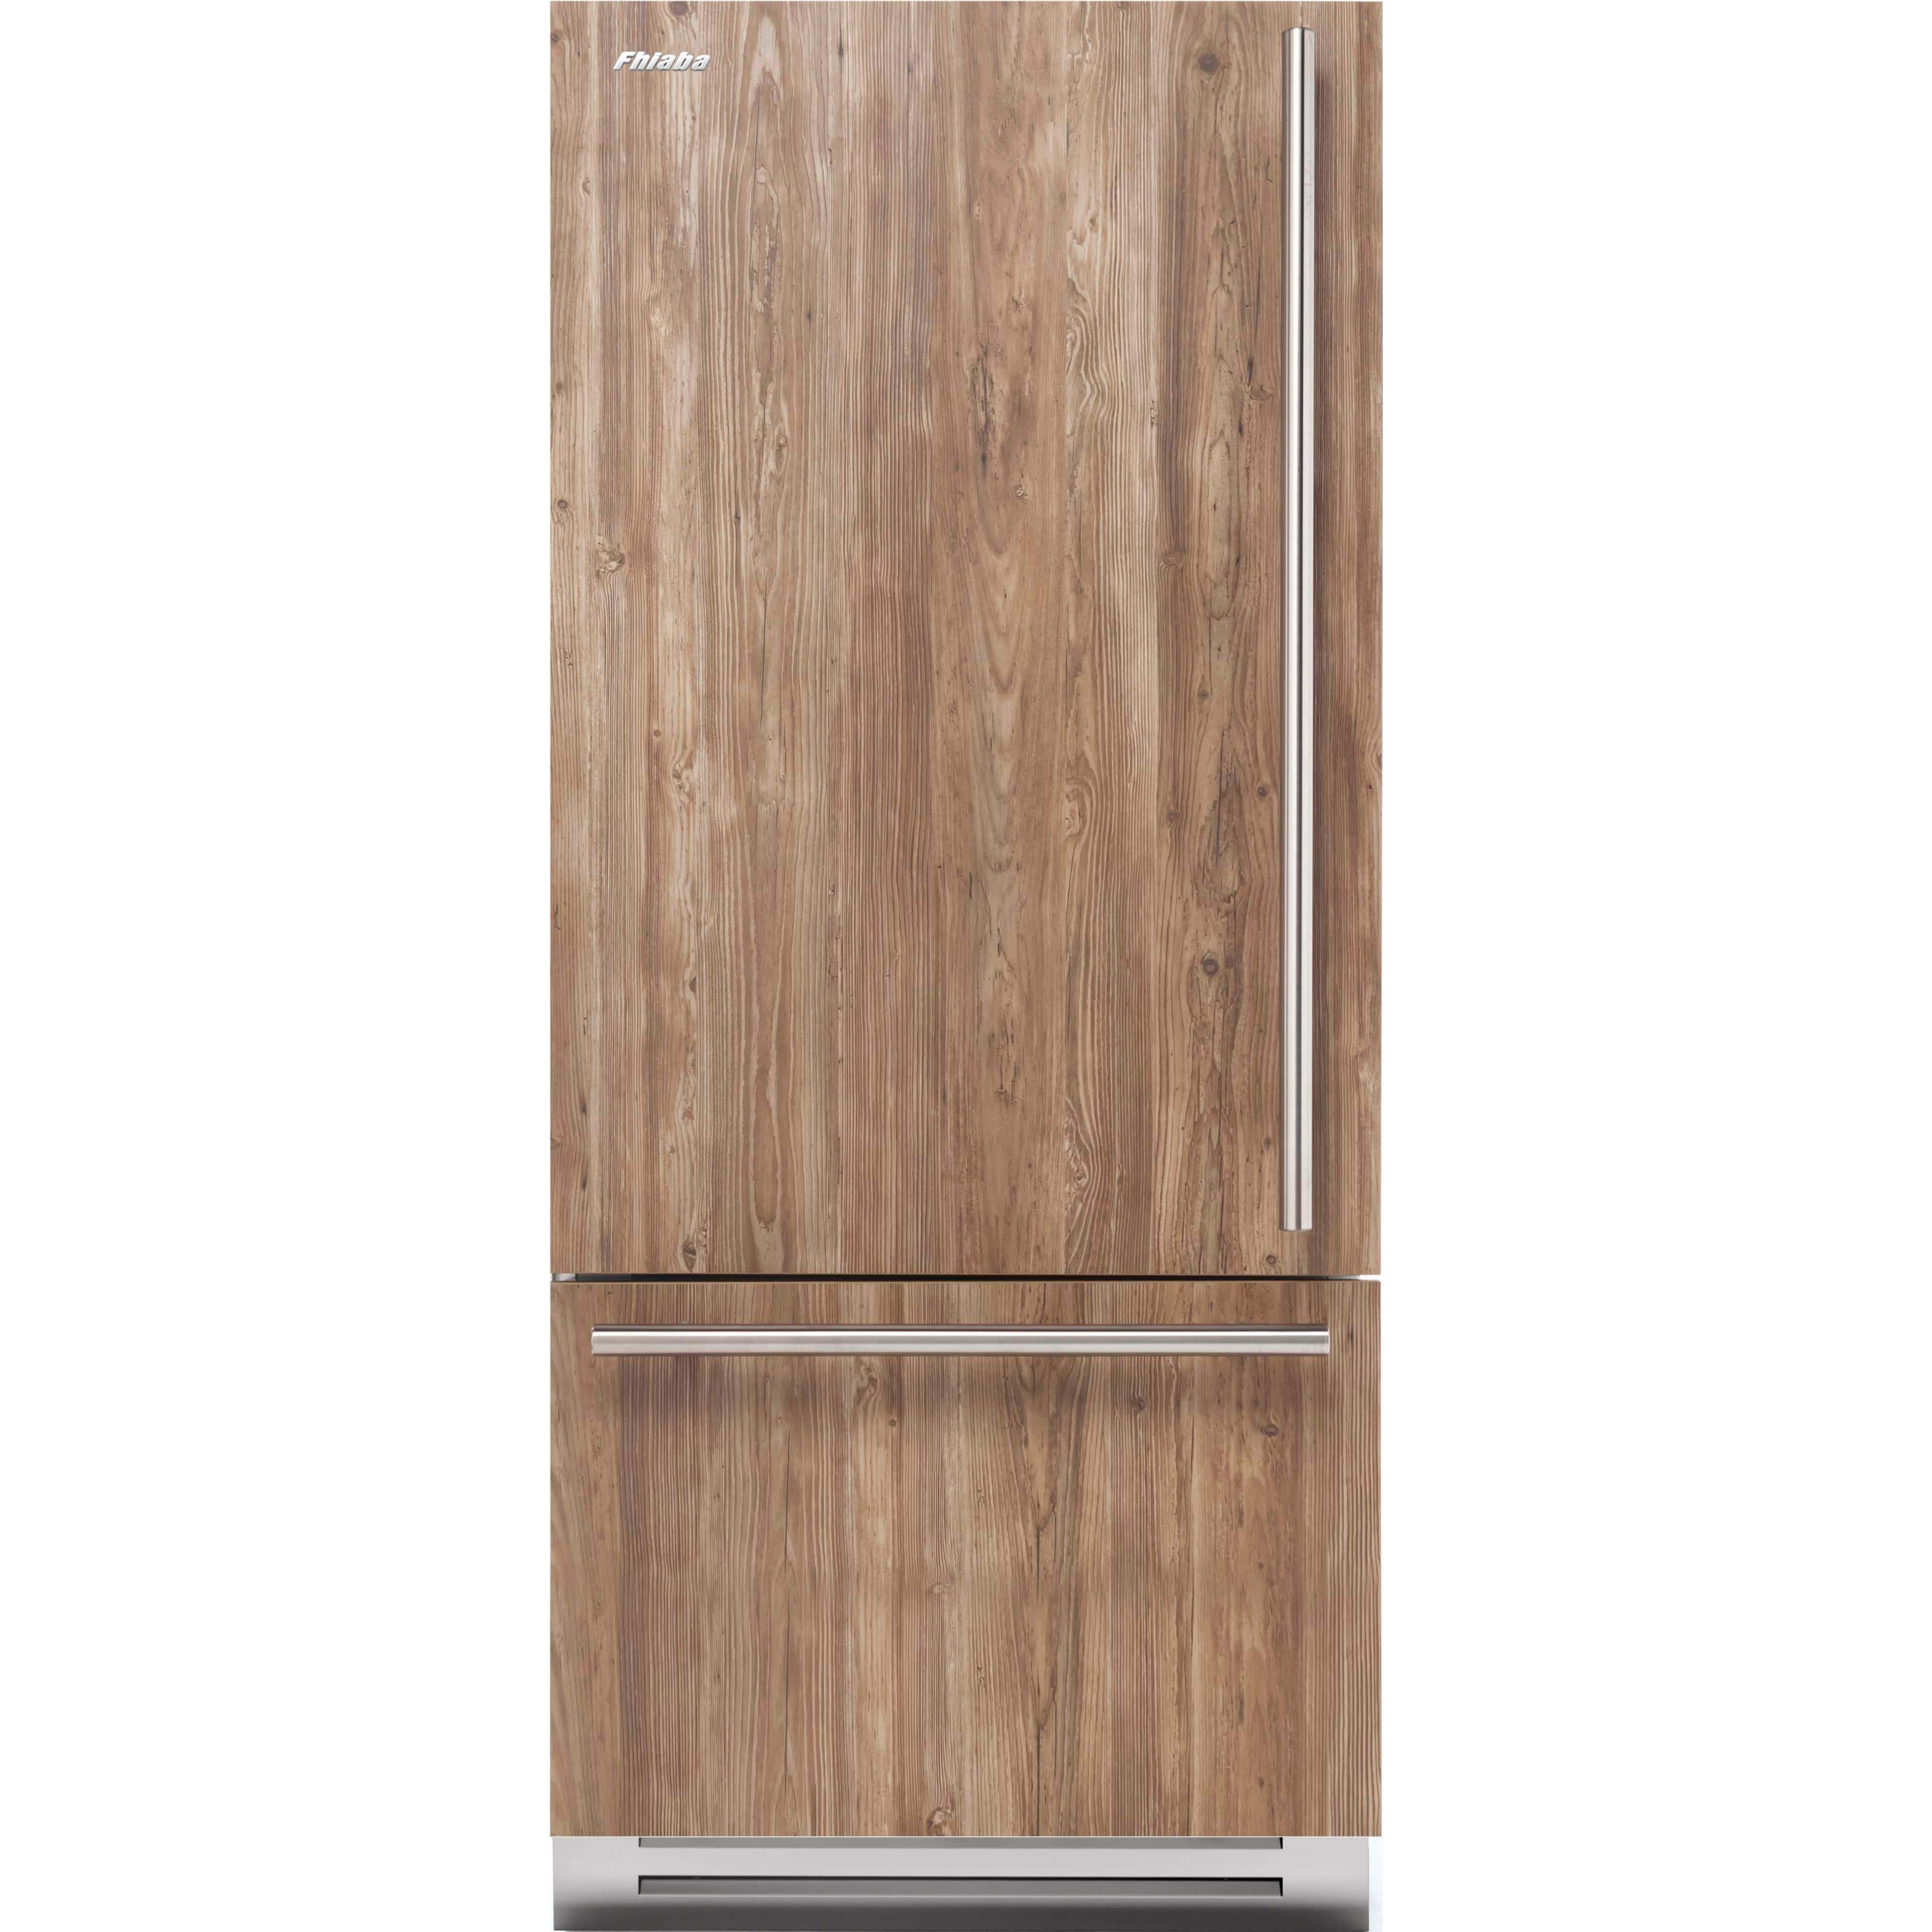 Fhiaba 36-inch, 18.7 cu.ft. Built-in Bottom Freezer Refrigerator with Interior Ice Maker FI36BI-LO1 Refrigerators FI36BILO1 Luxury Appliances Direct